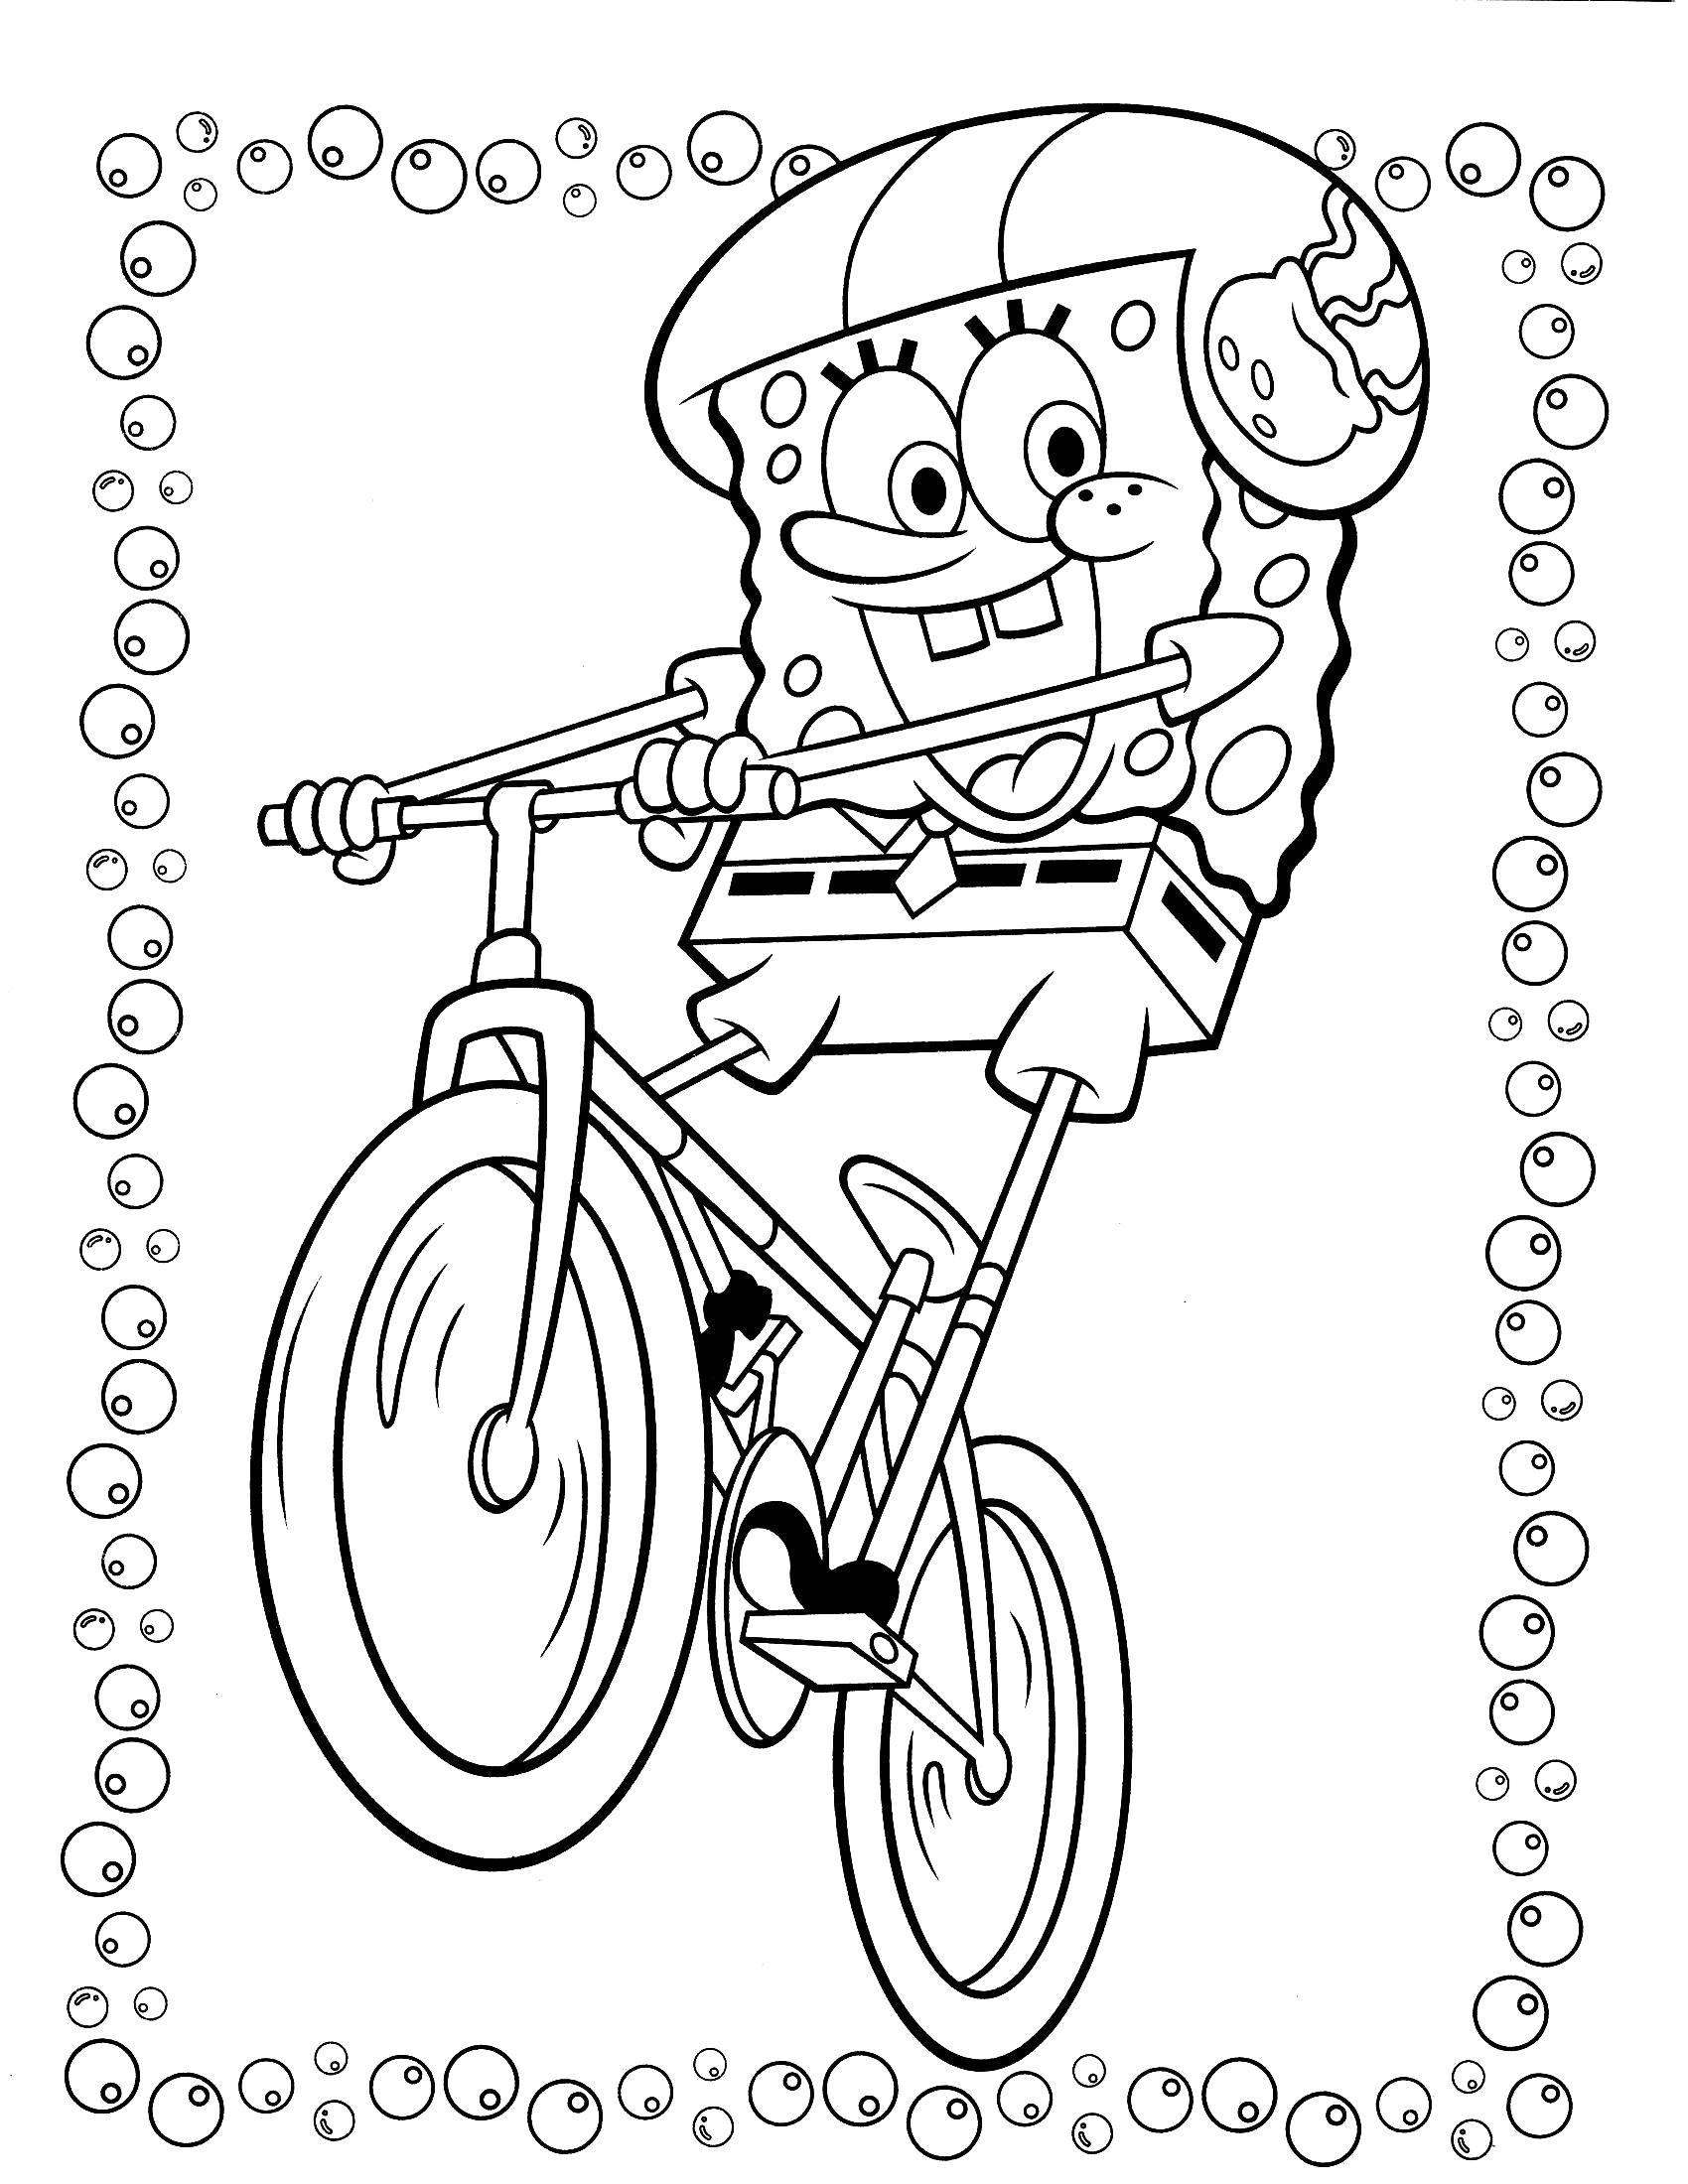 Название: Раскраска Губка Боб на велосипеде. Категория: Спанч боб. Теги: Спанч боб.